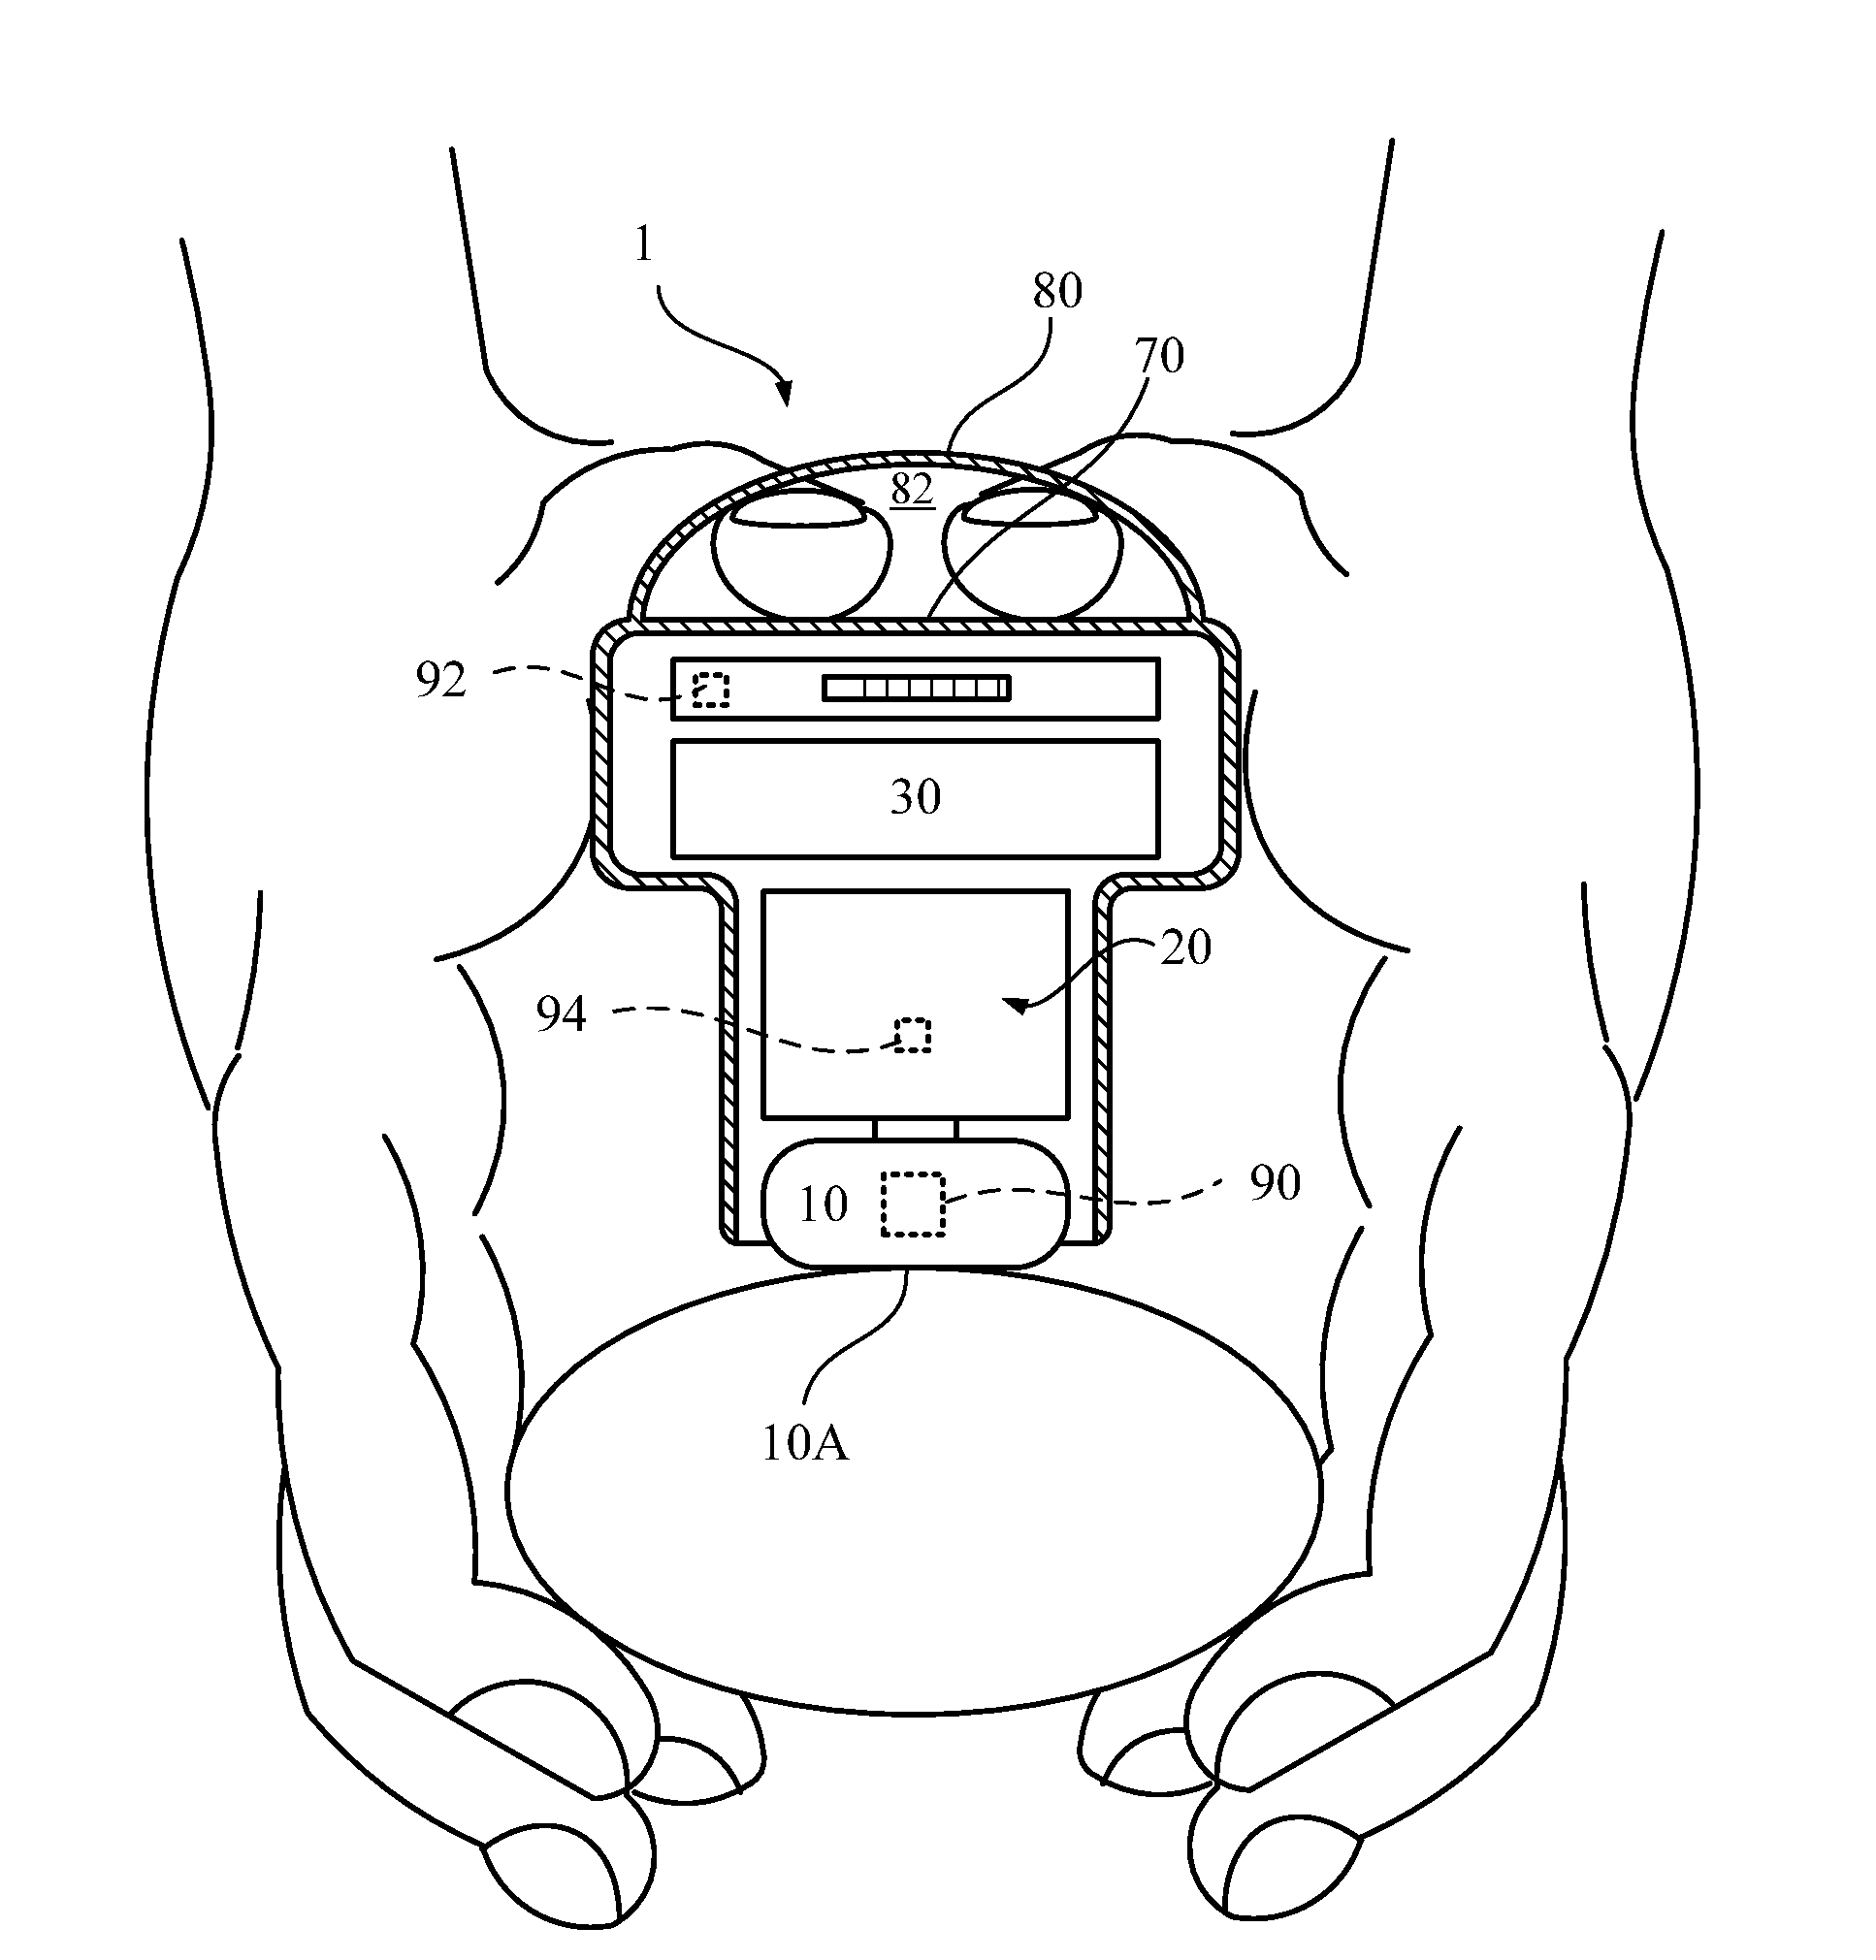 Automatic chest compression device